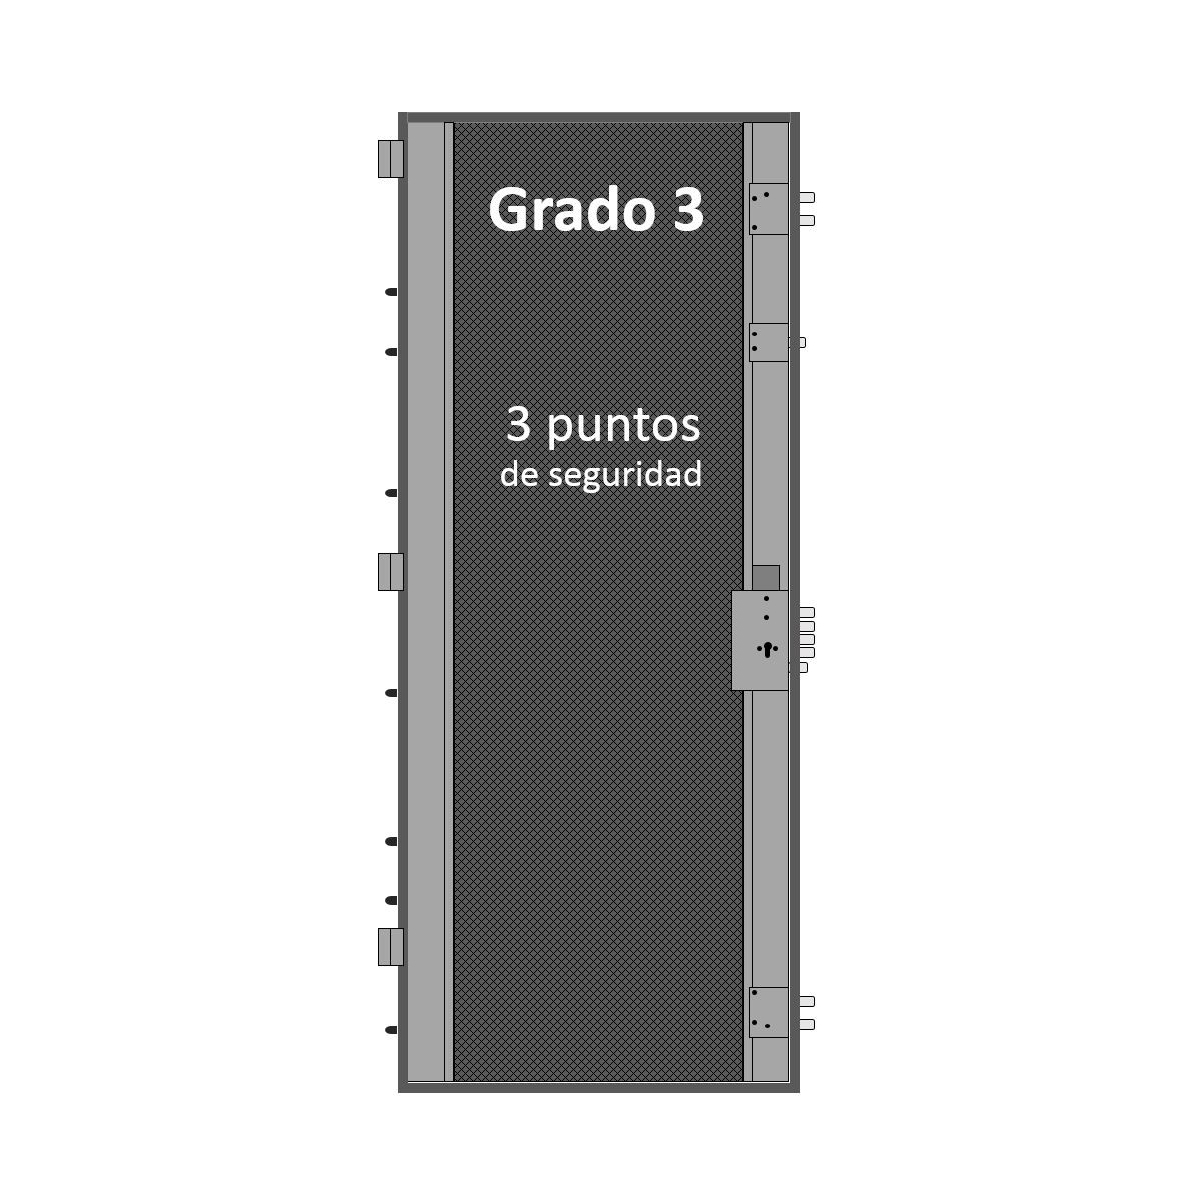 Puertas acorazadas Serie Omega Cearco - Puerta Acorazada 100cm grado 3 Alborán Omega